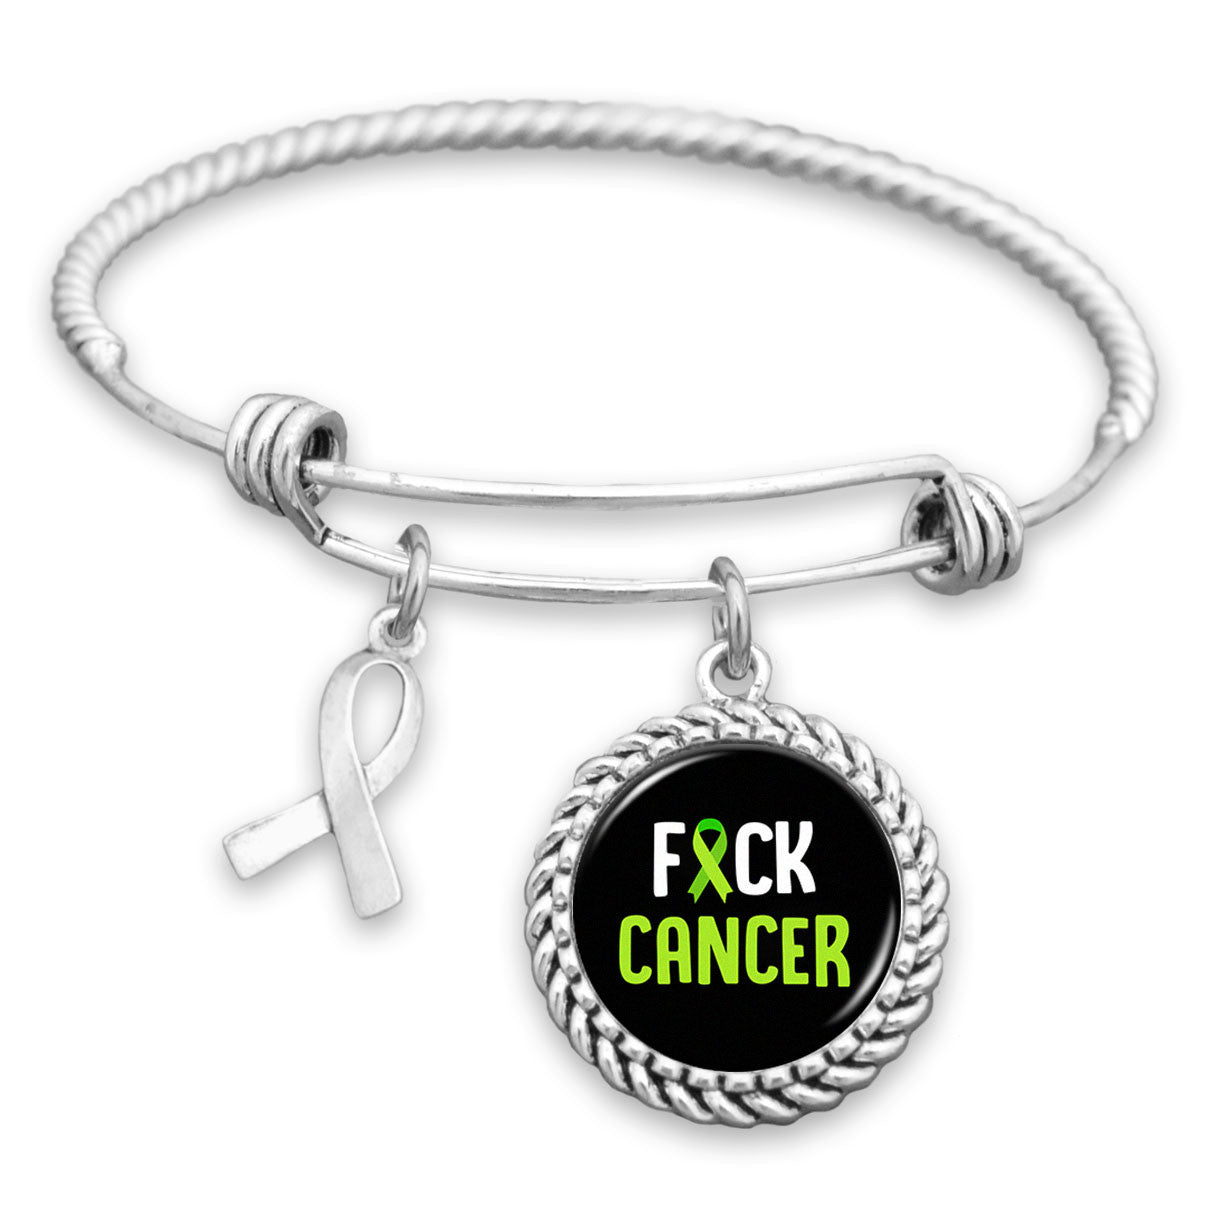 F*ck Cancer Lymphoma Charm Bracelet